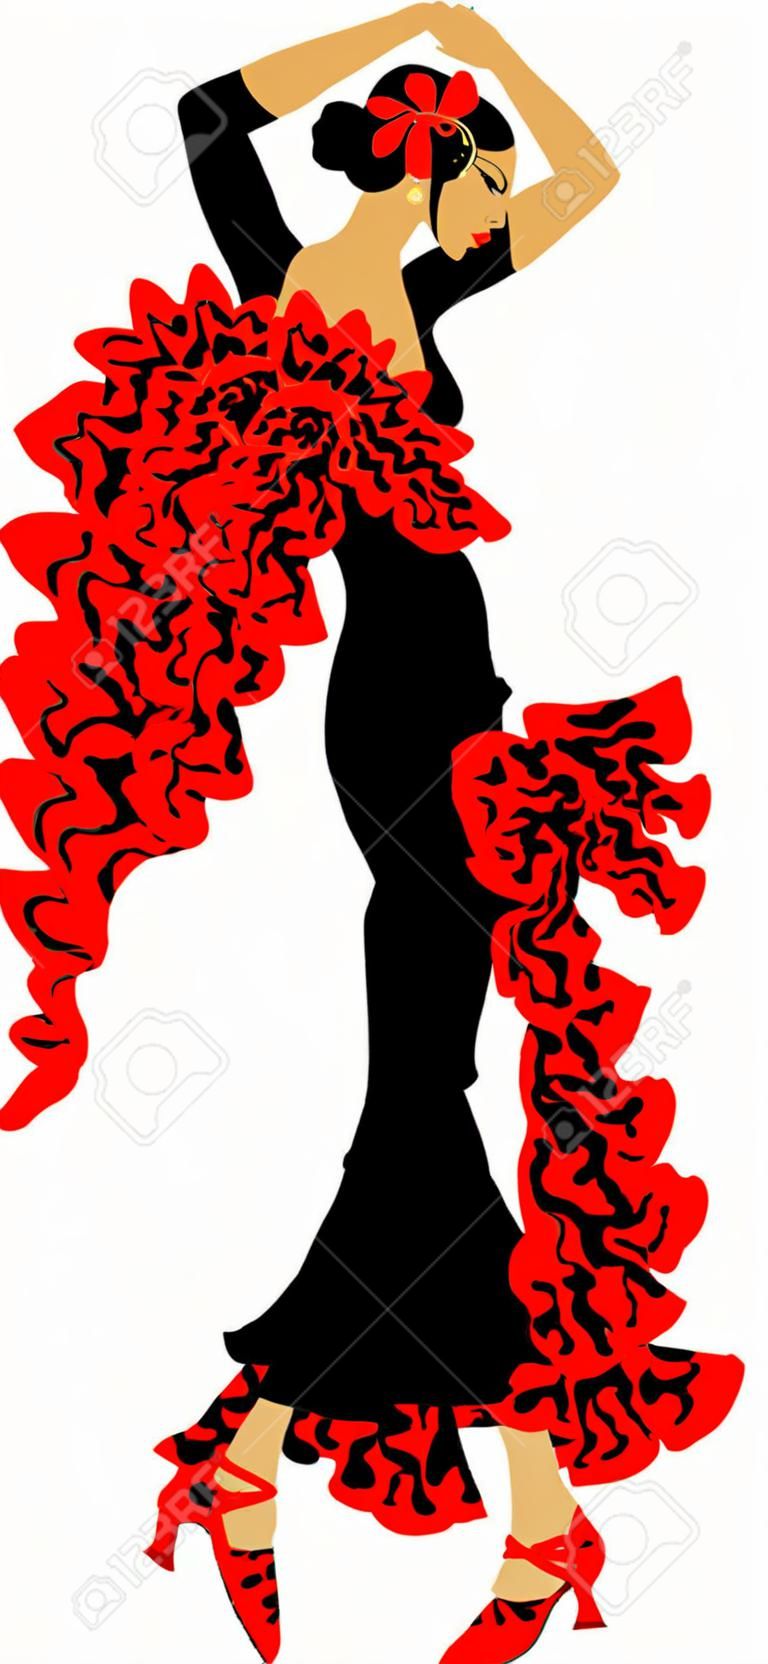 danser in zwarte jurk dansend flamenco (illustratie);